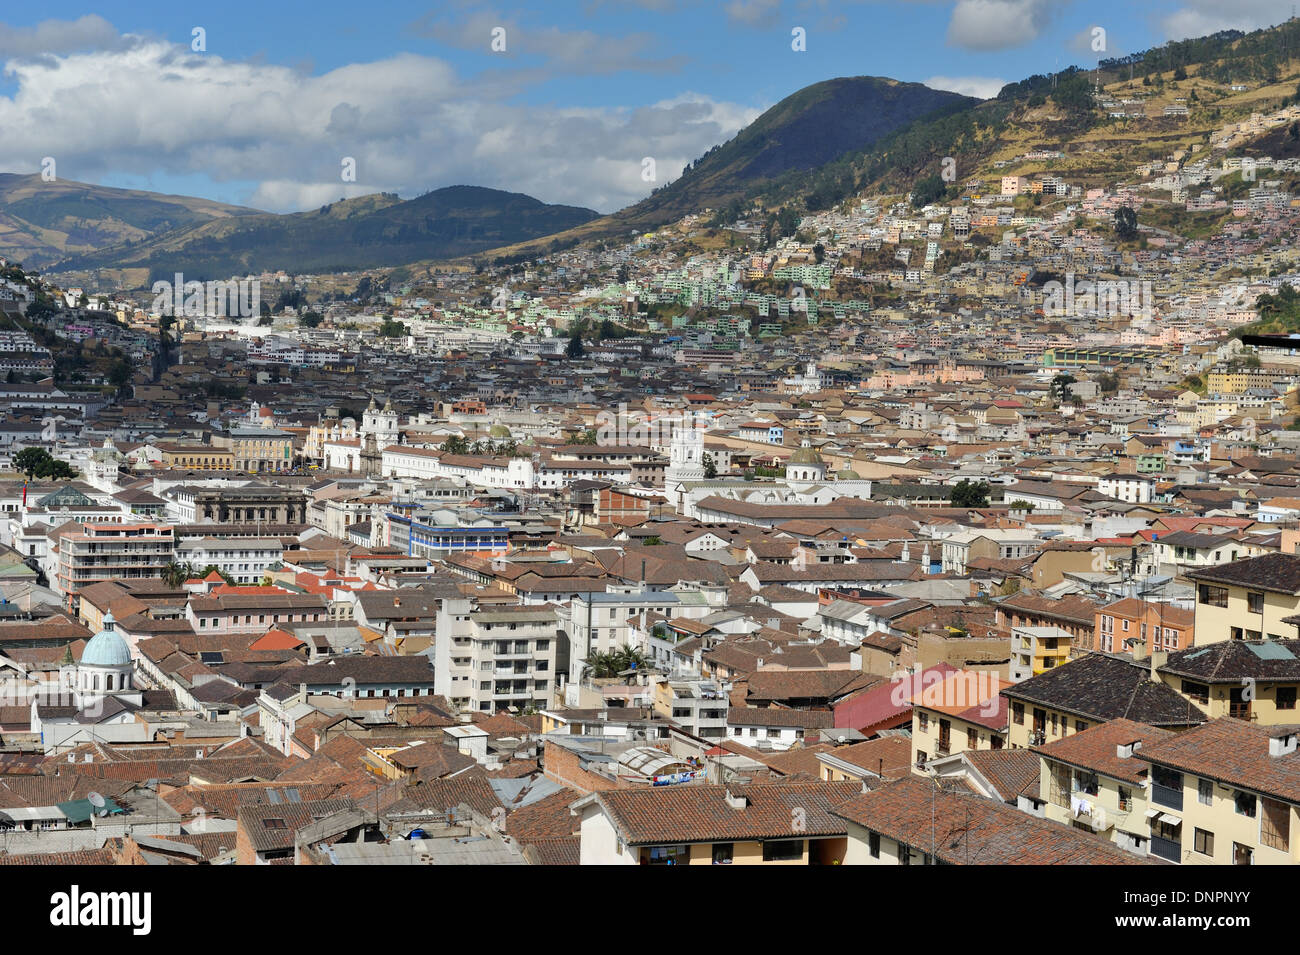 Downtown of Quito city, capital of Ecuador Stock Photo